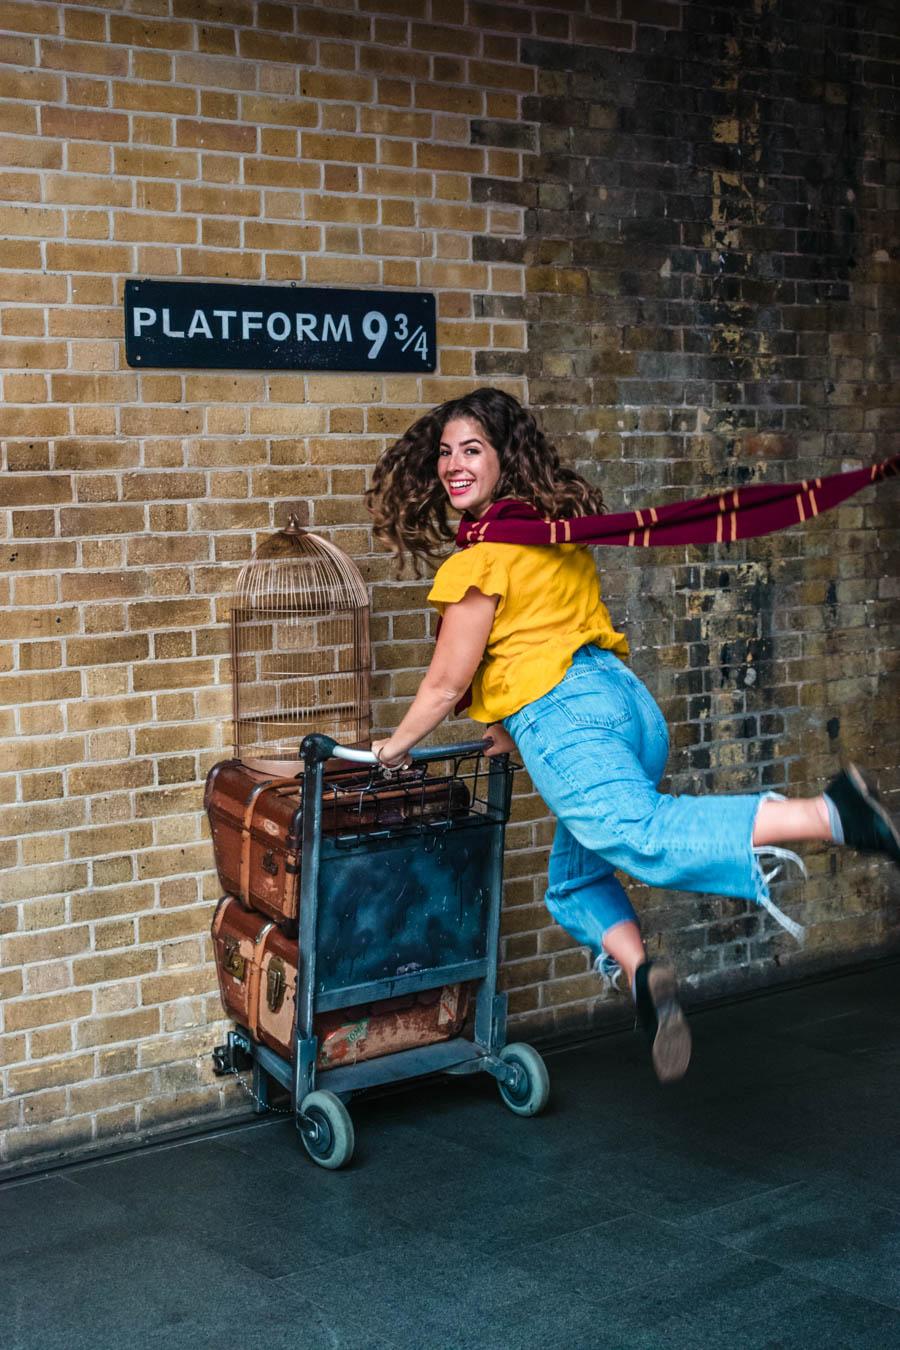 Platform 9 3/4 London Free harry Potter Things